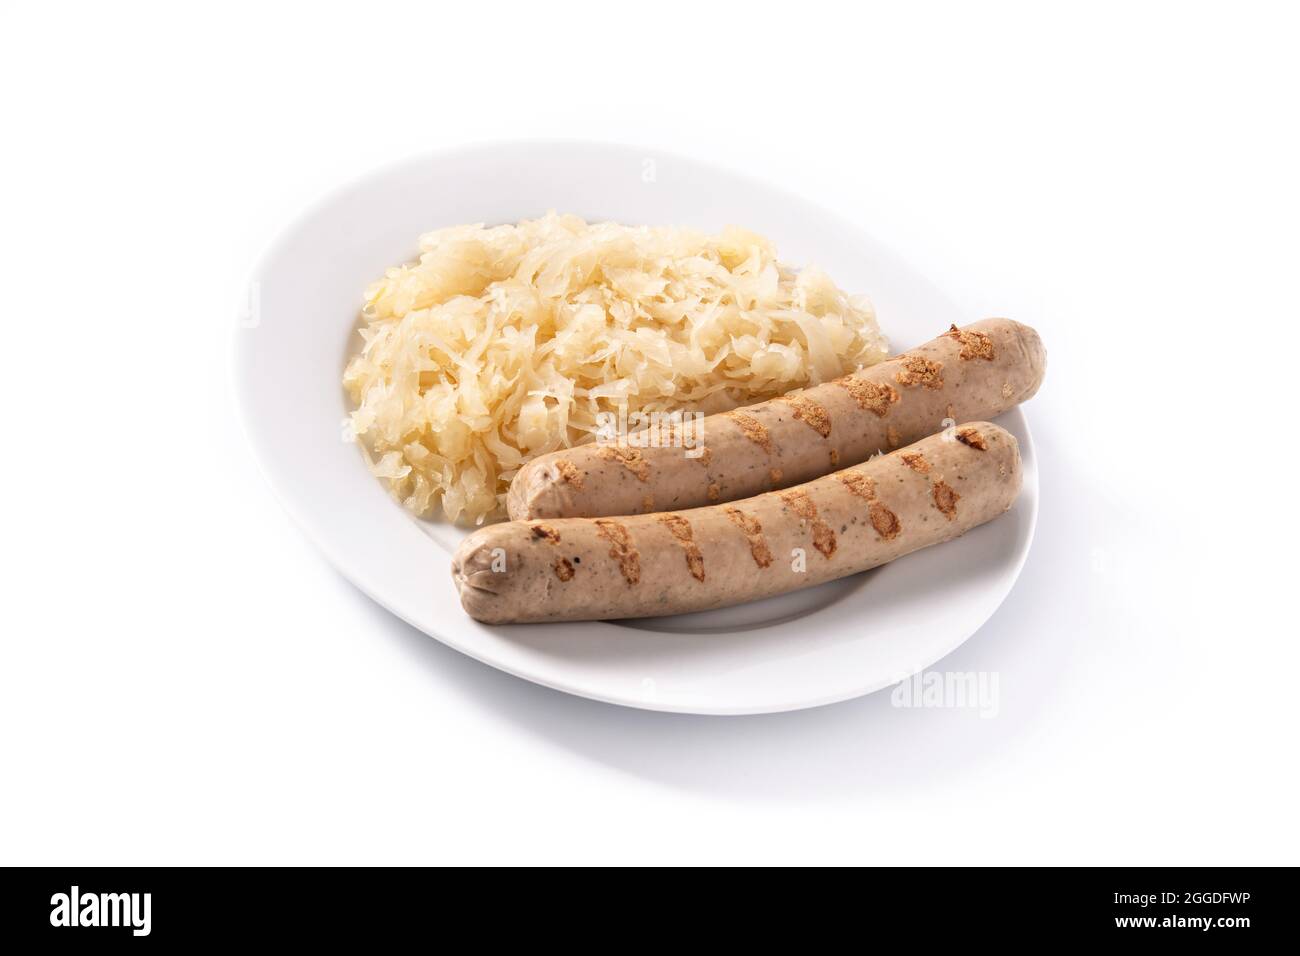 Bratwurst sausage and sauerkraut isolated on white background Stock Photo